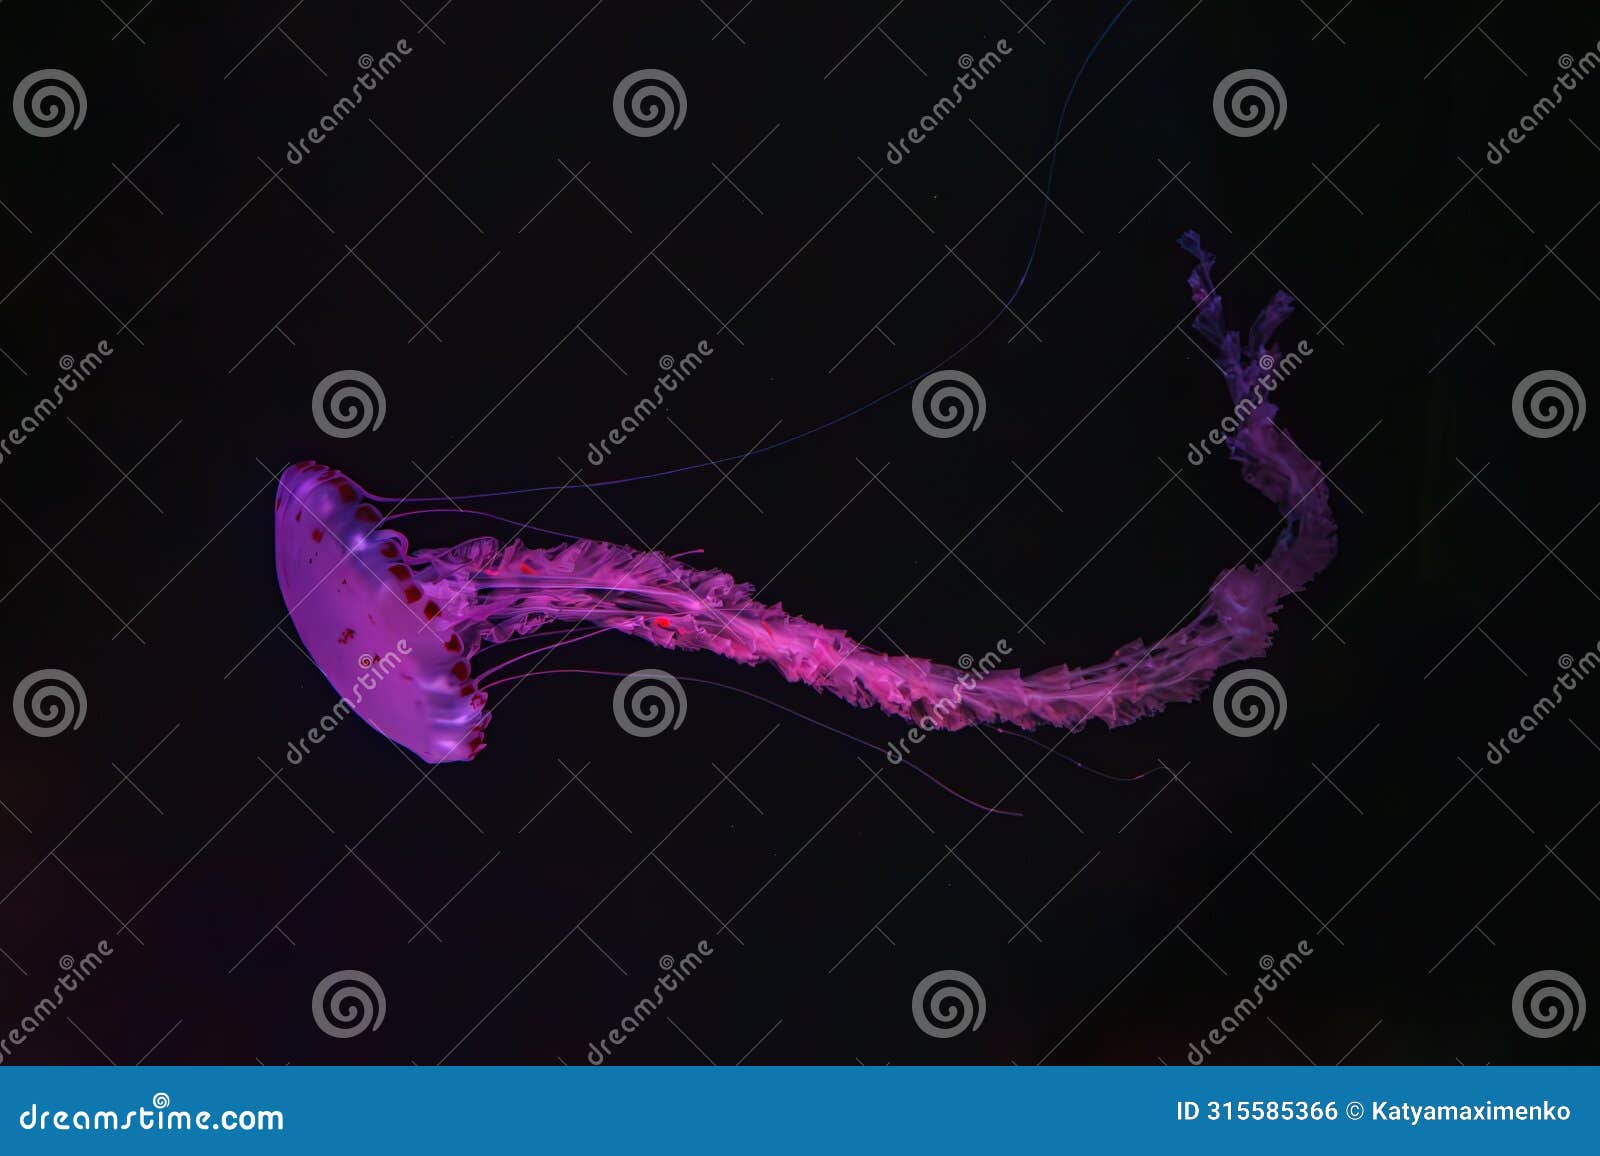 purple striped jellyfish, chrysaora colorata swimming in dark water of aquarium